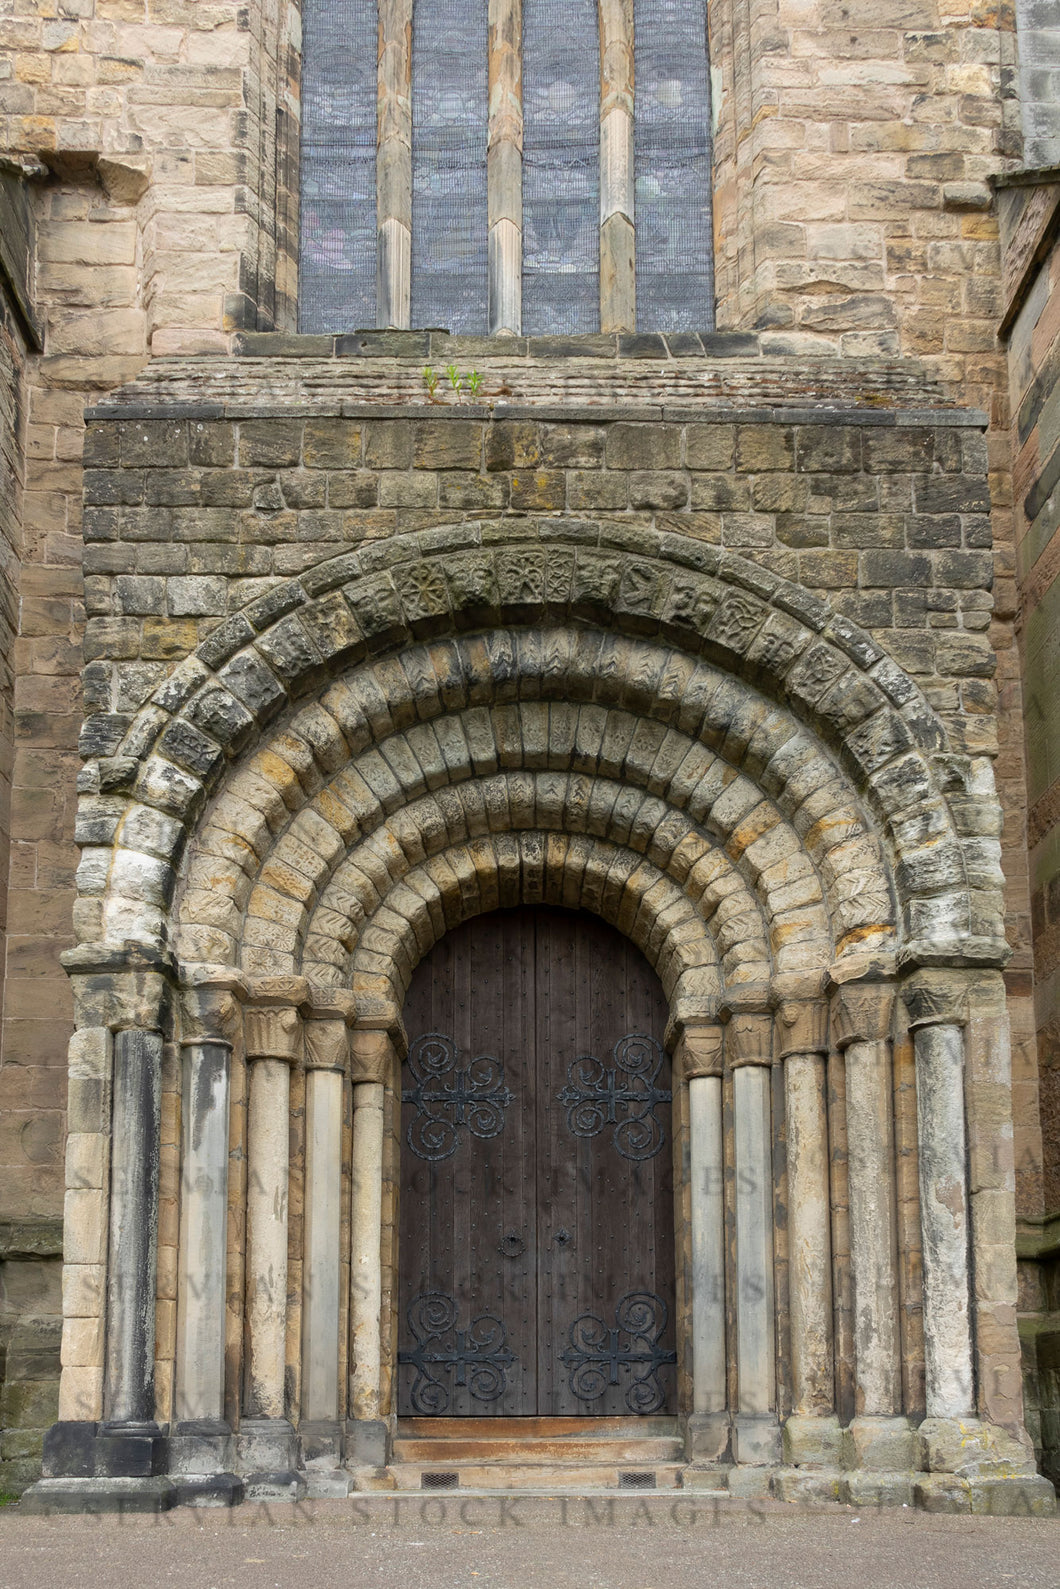 Historical building -  Abbey doorway, Scotland (Nick 0491)